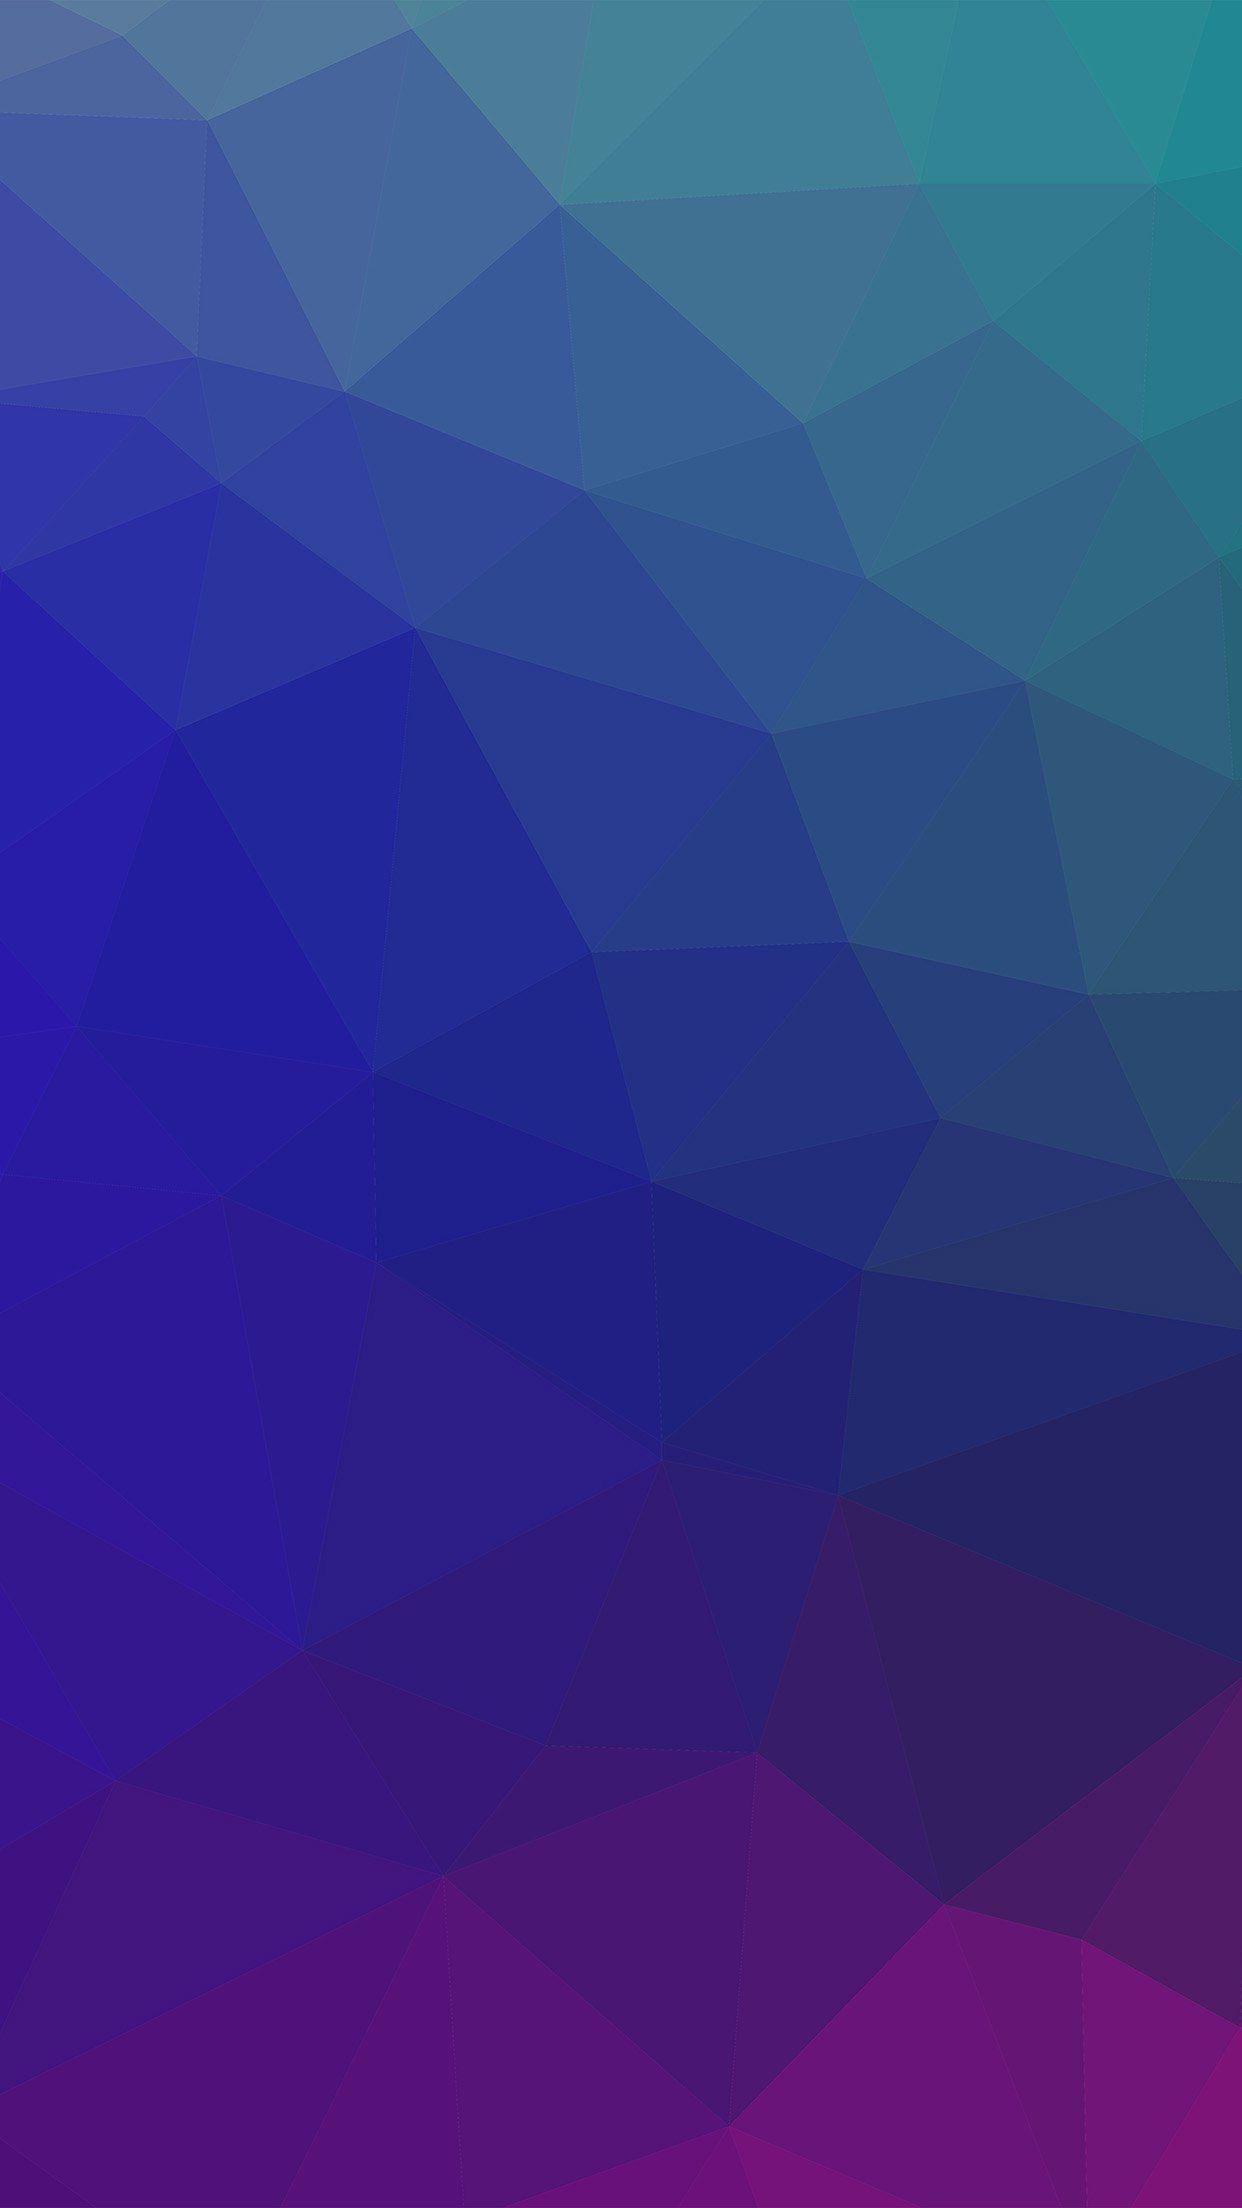 I Love Papers. samsung galaxy polyart dark blue purple pattern